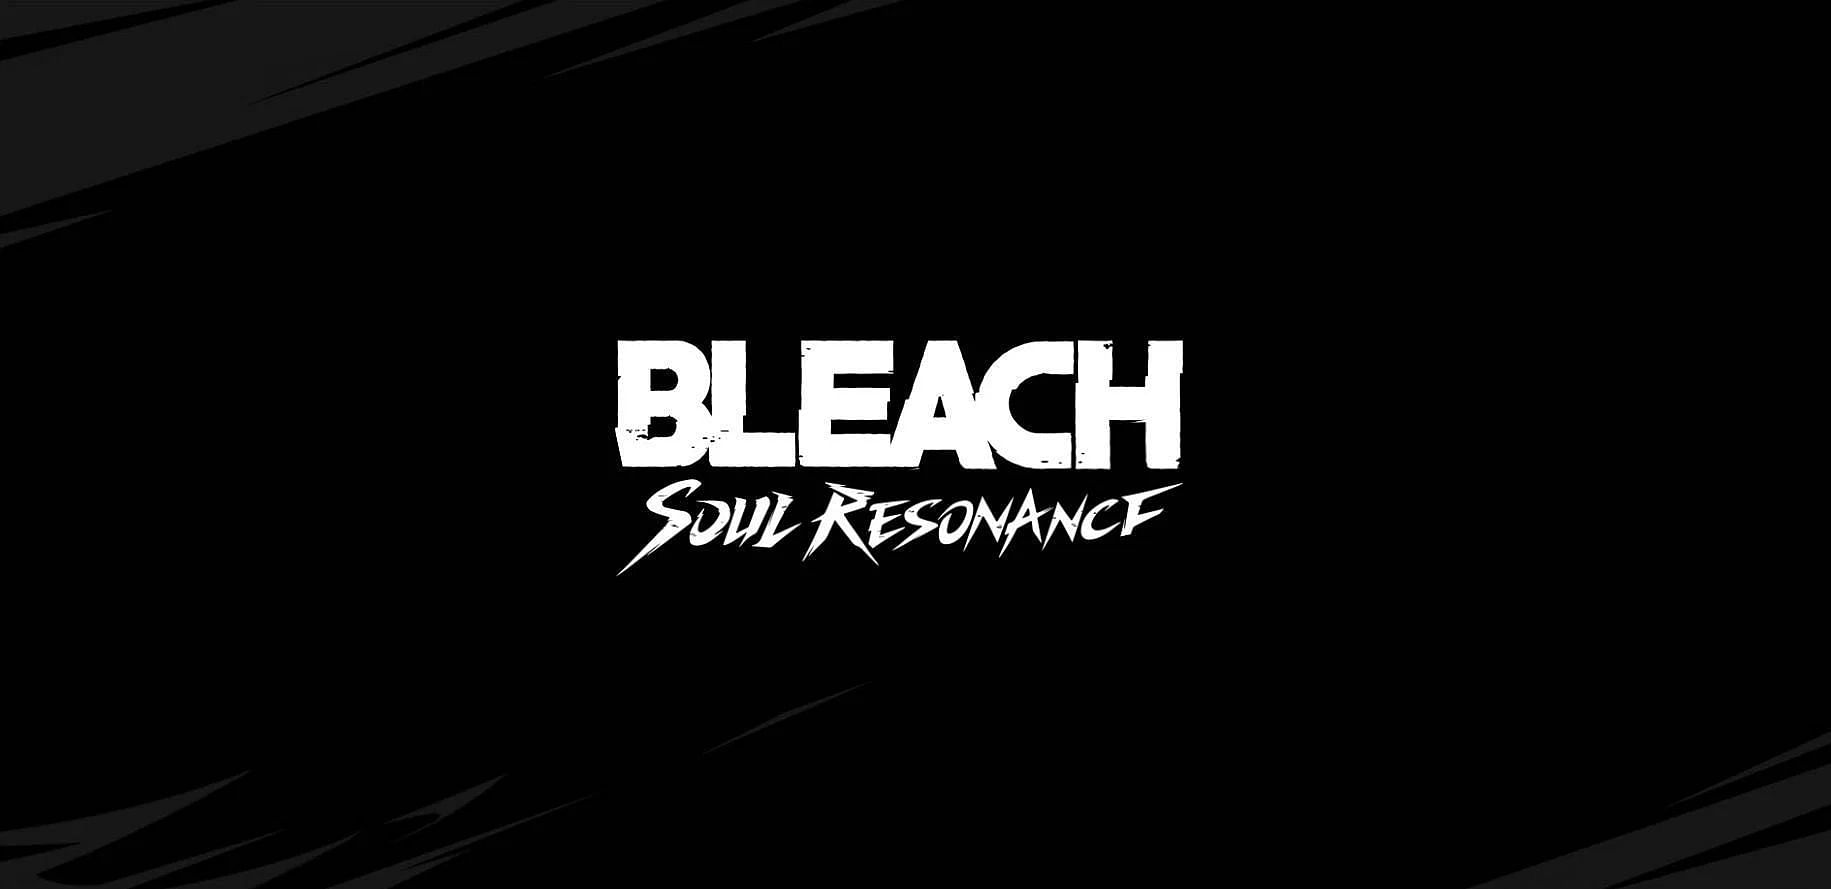 Bleach: Soul Resonance poster (Image via Black Moon Studio)